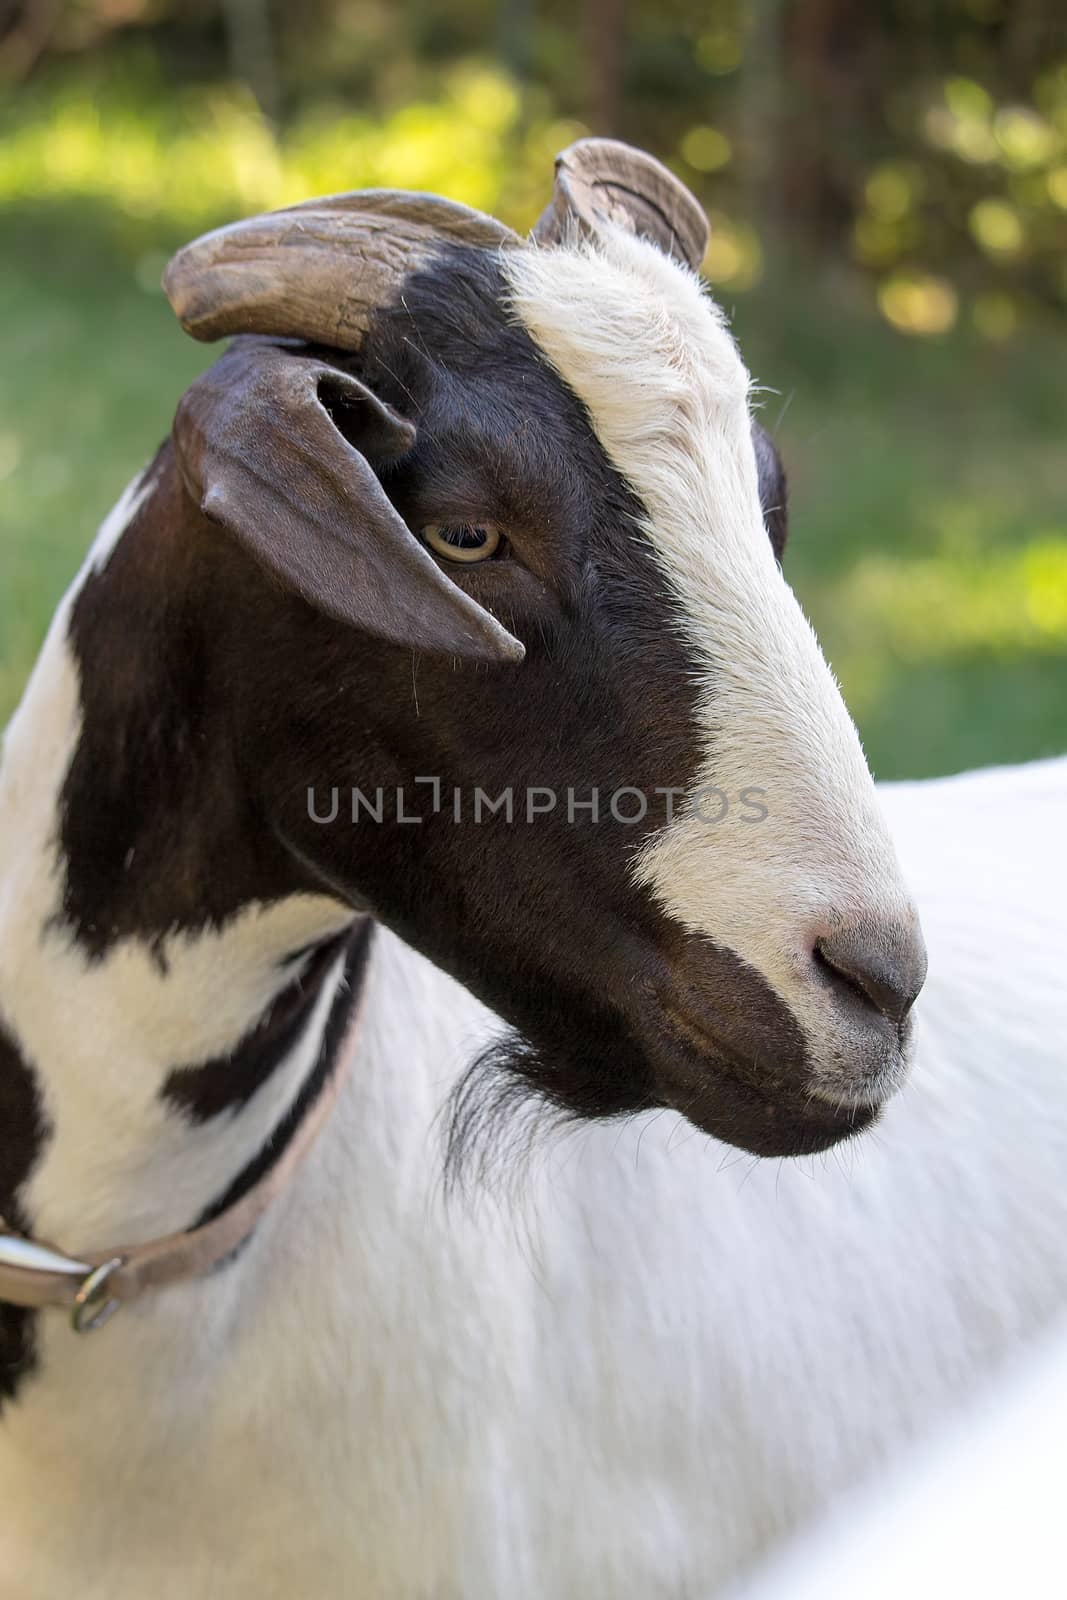 Black and white goat at a farm backyard outdoor closeup portrait